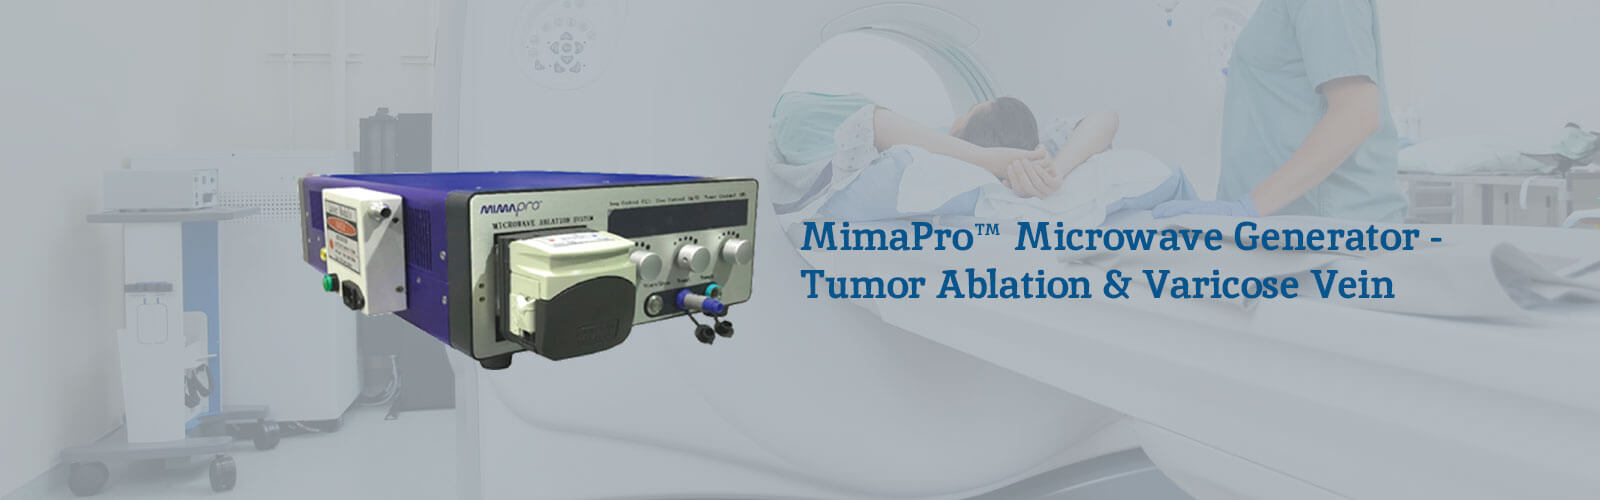 MimaPro Microwave Generator – Tumor Ablation and Varicose Vein